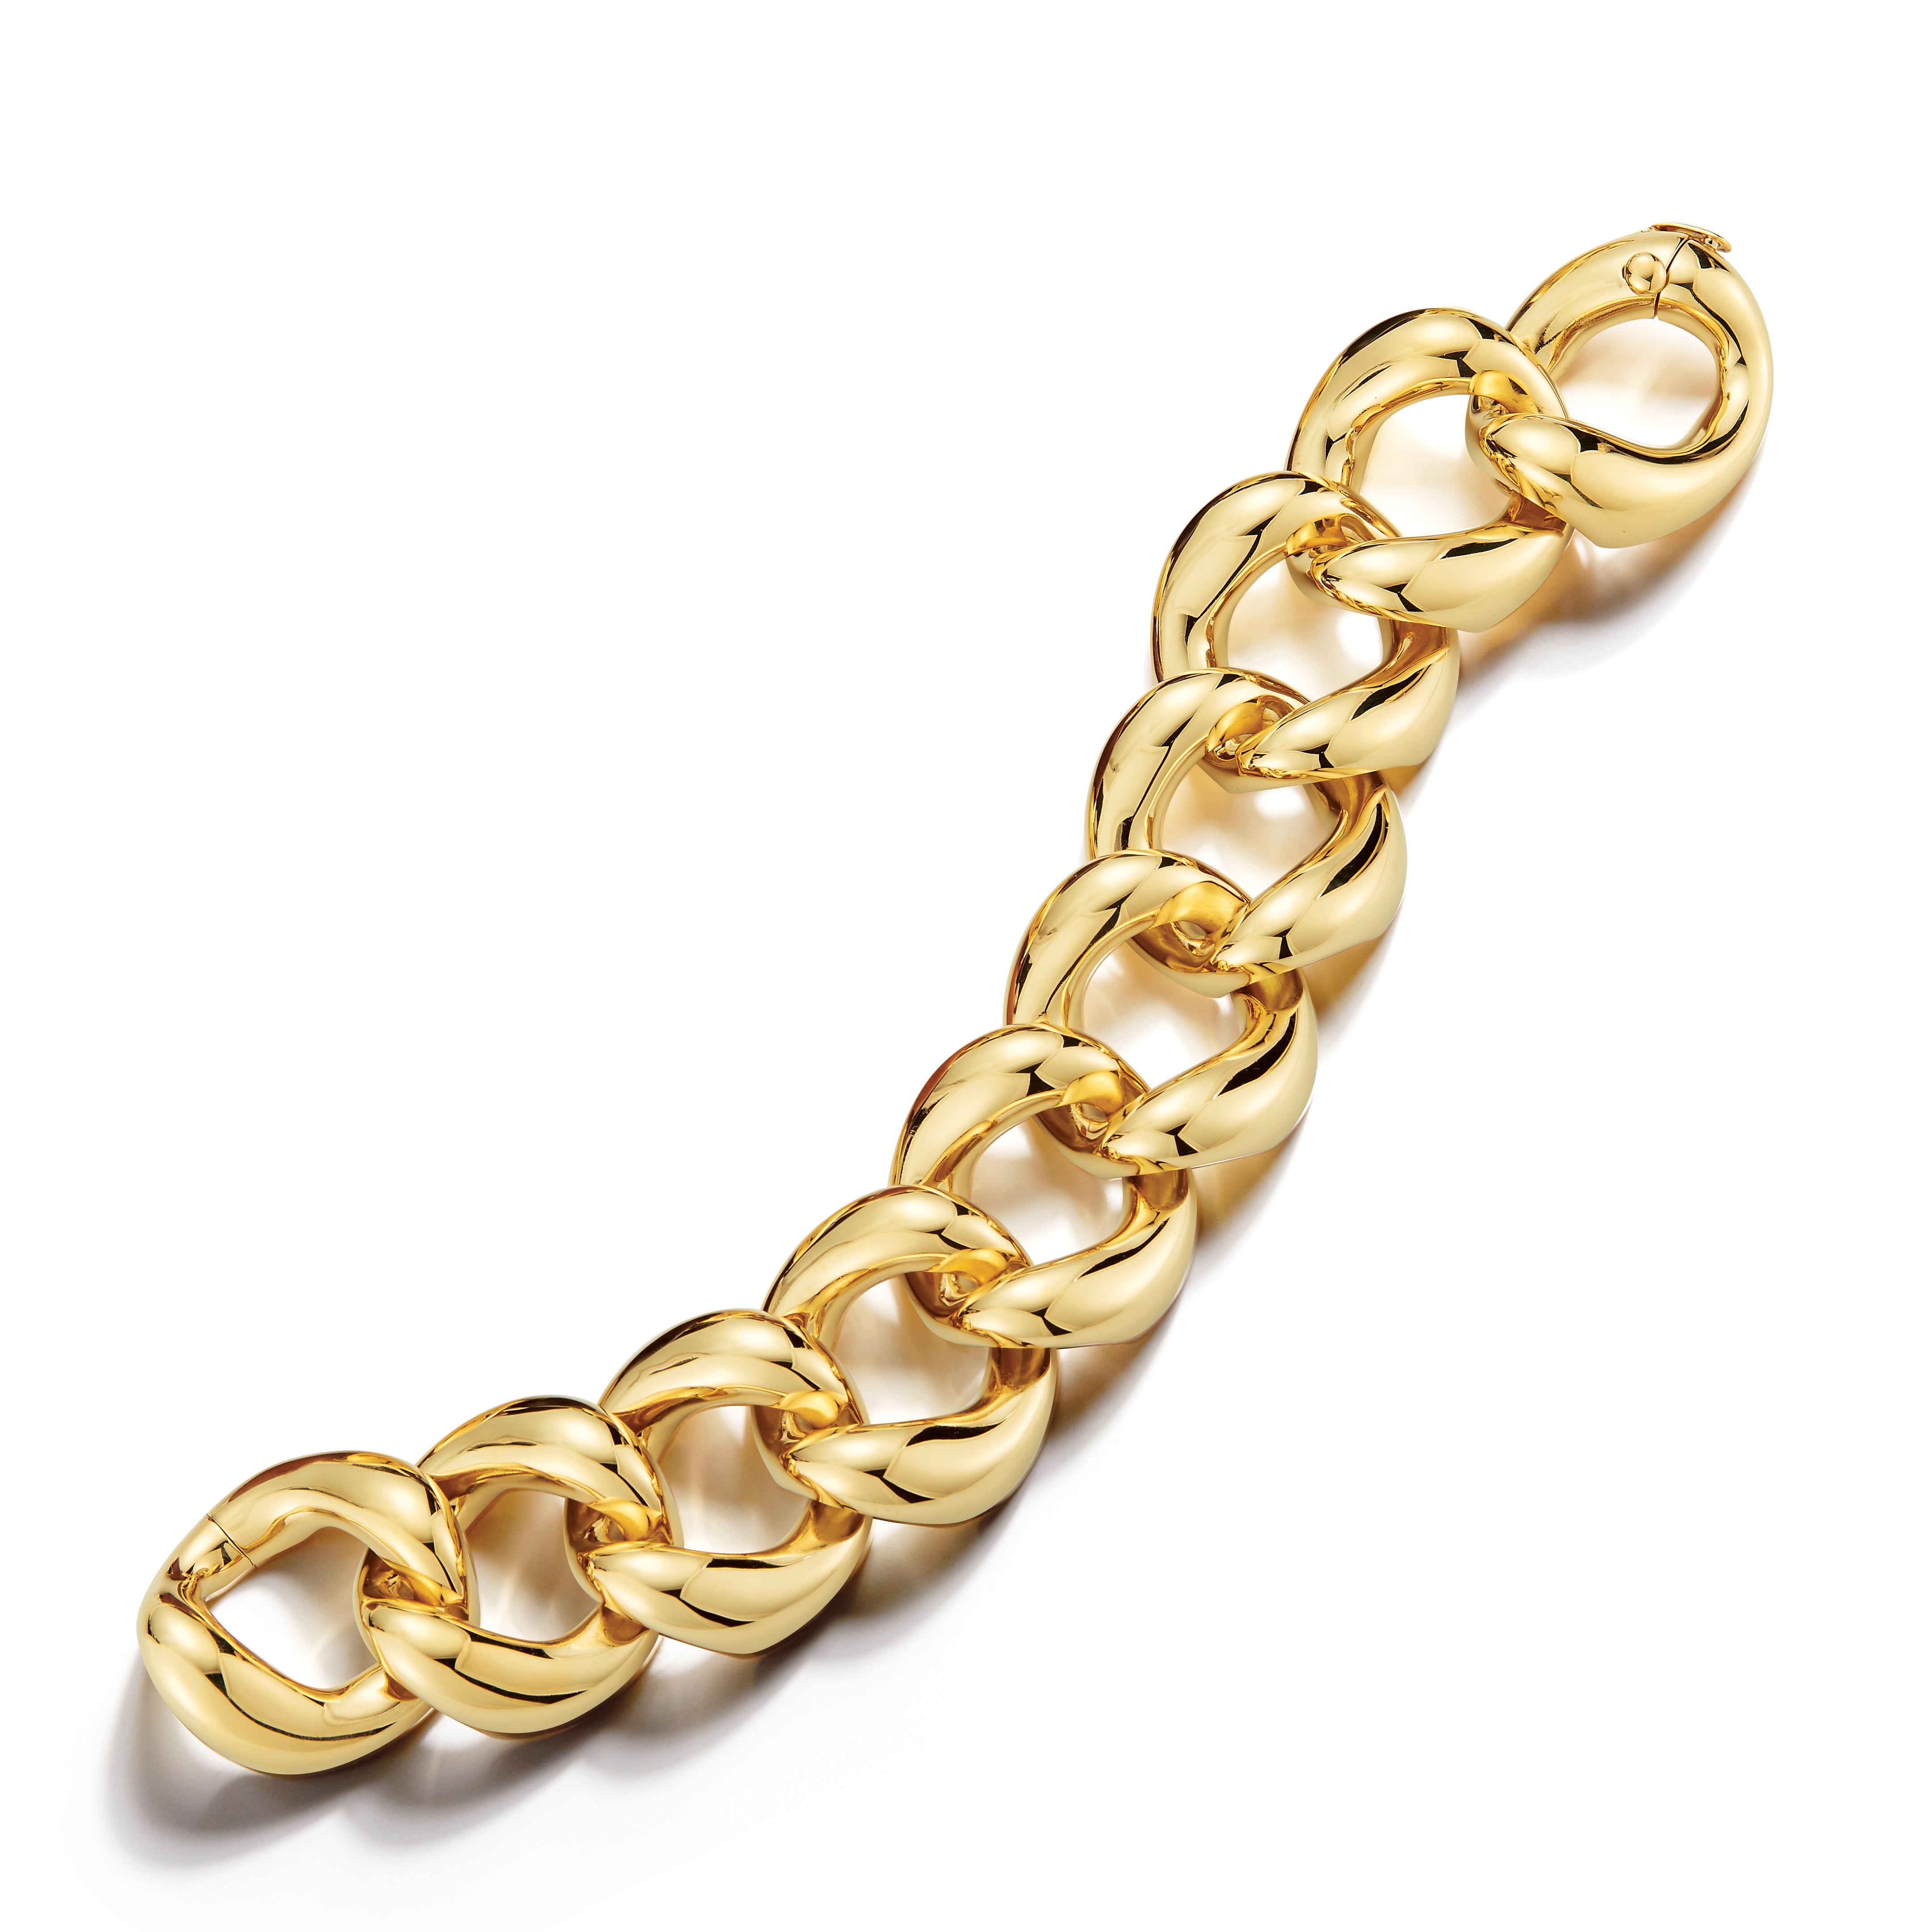 LARGE EMERGING GOLD LINK BRACELET - Pam Fox Jewelry